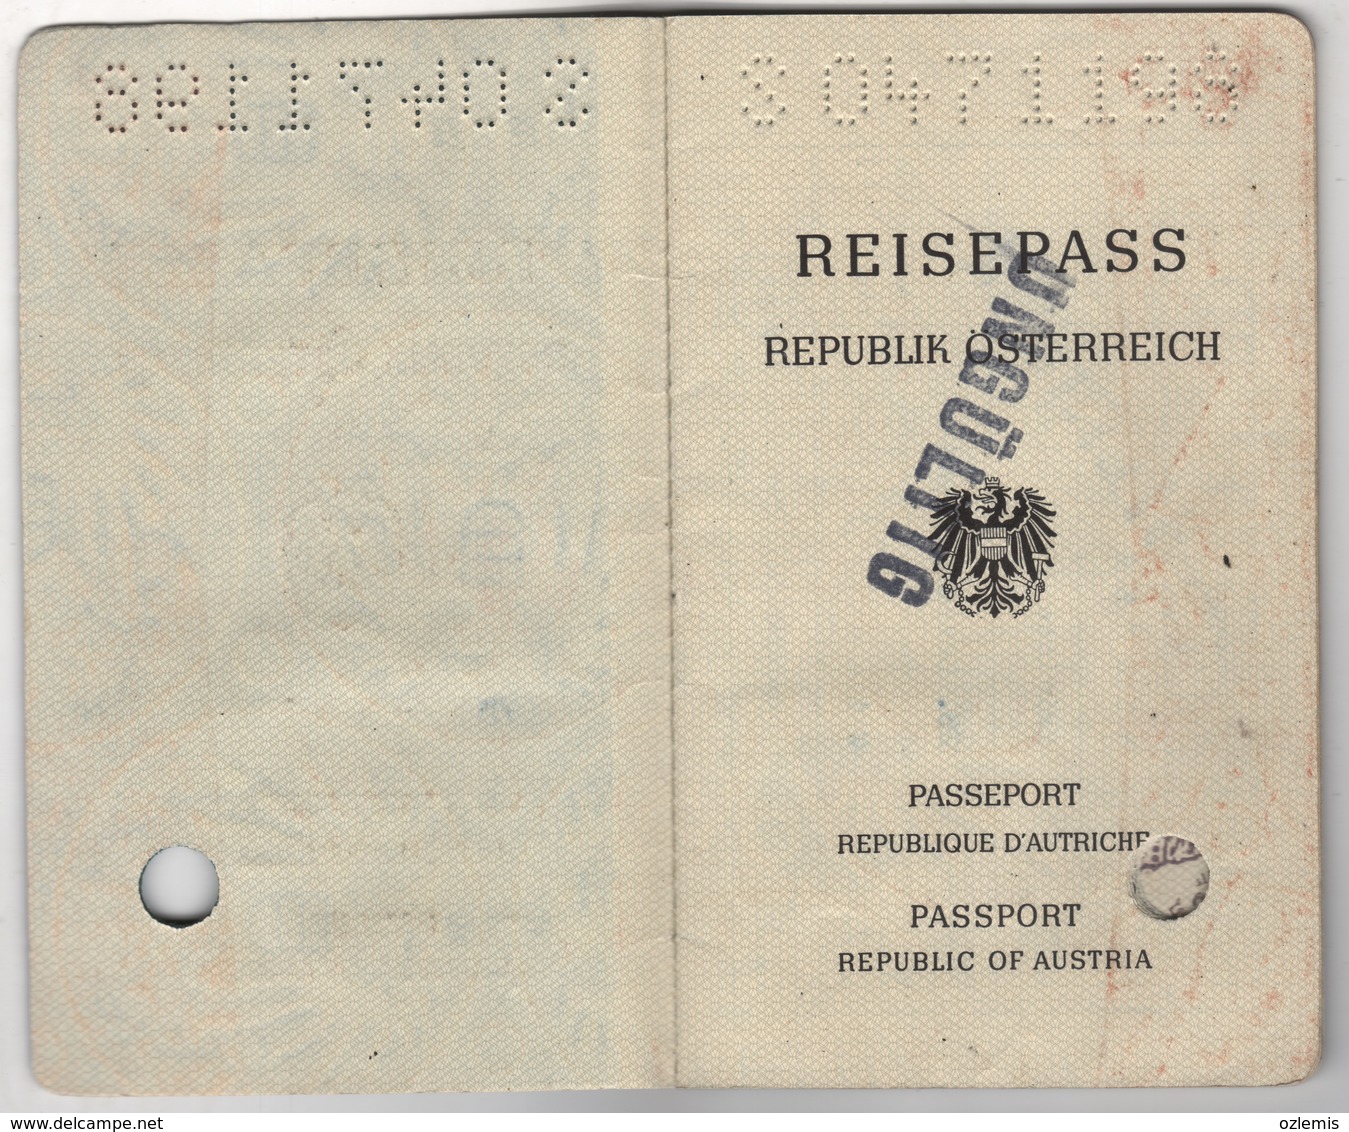 1987 REISEPASS  REPUBLIK OSTERREICH,PASSPORT REPUBLIC OF AUSTRIA  32 PAGES - Historical Documents